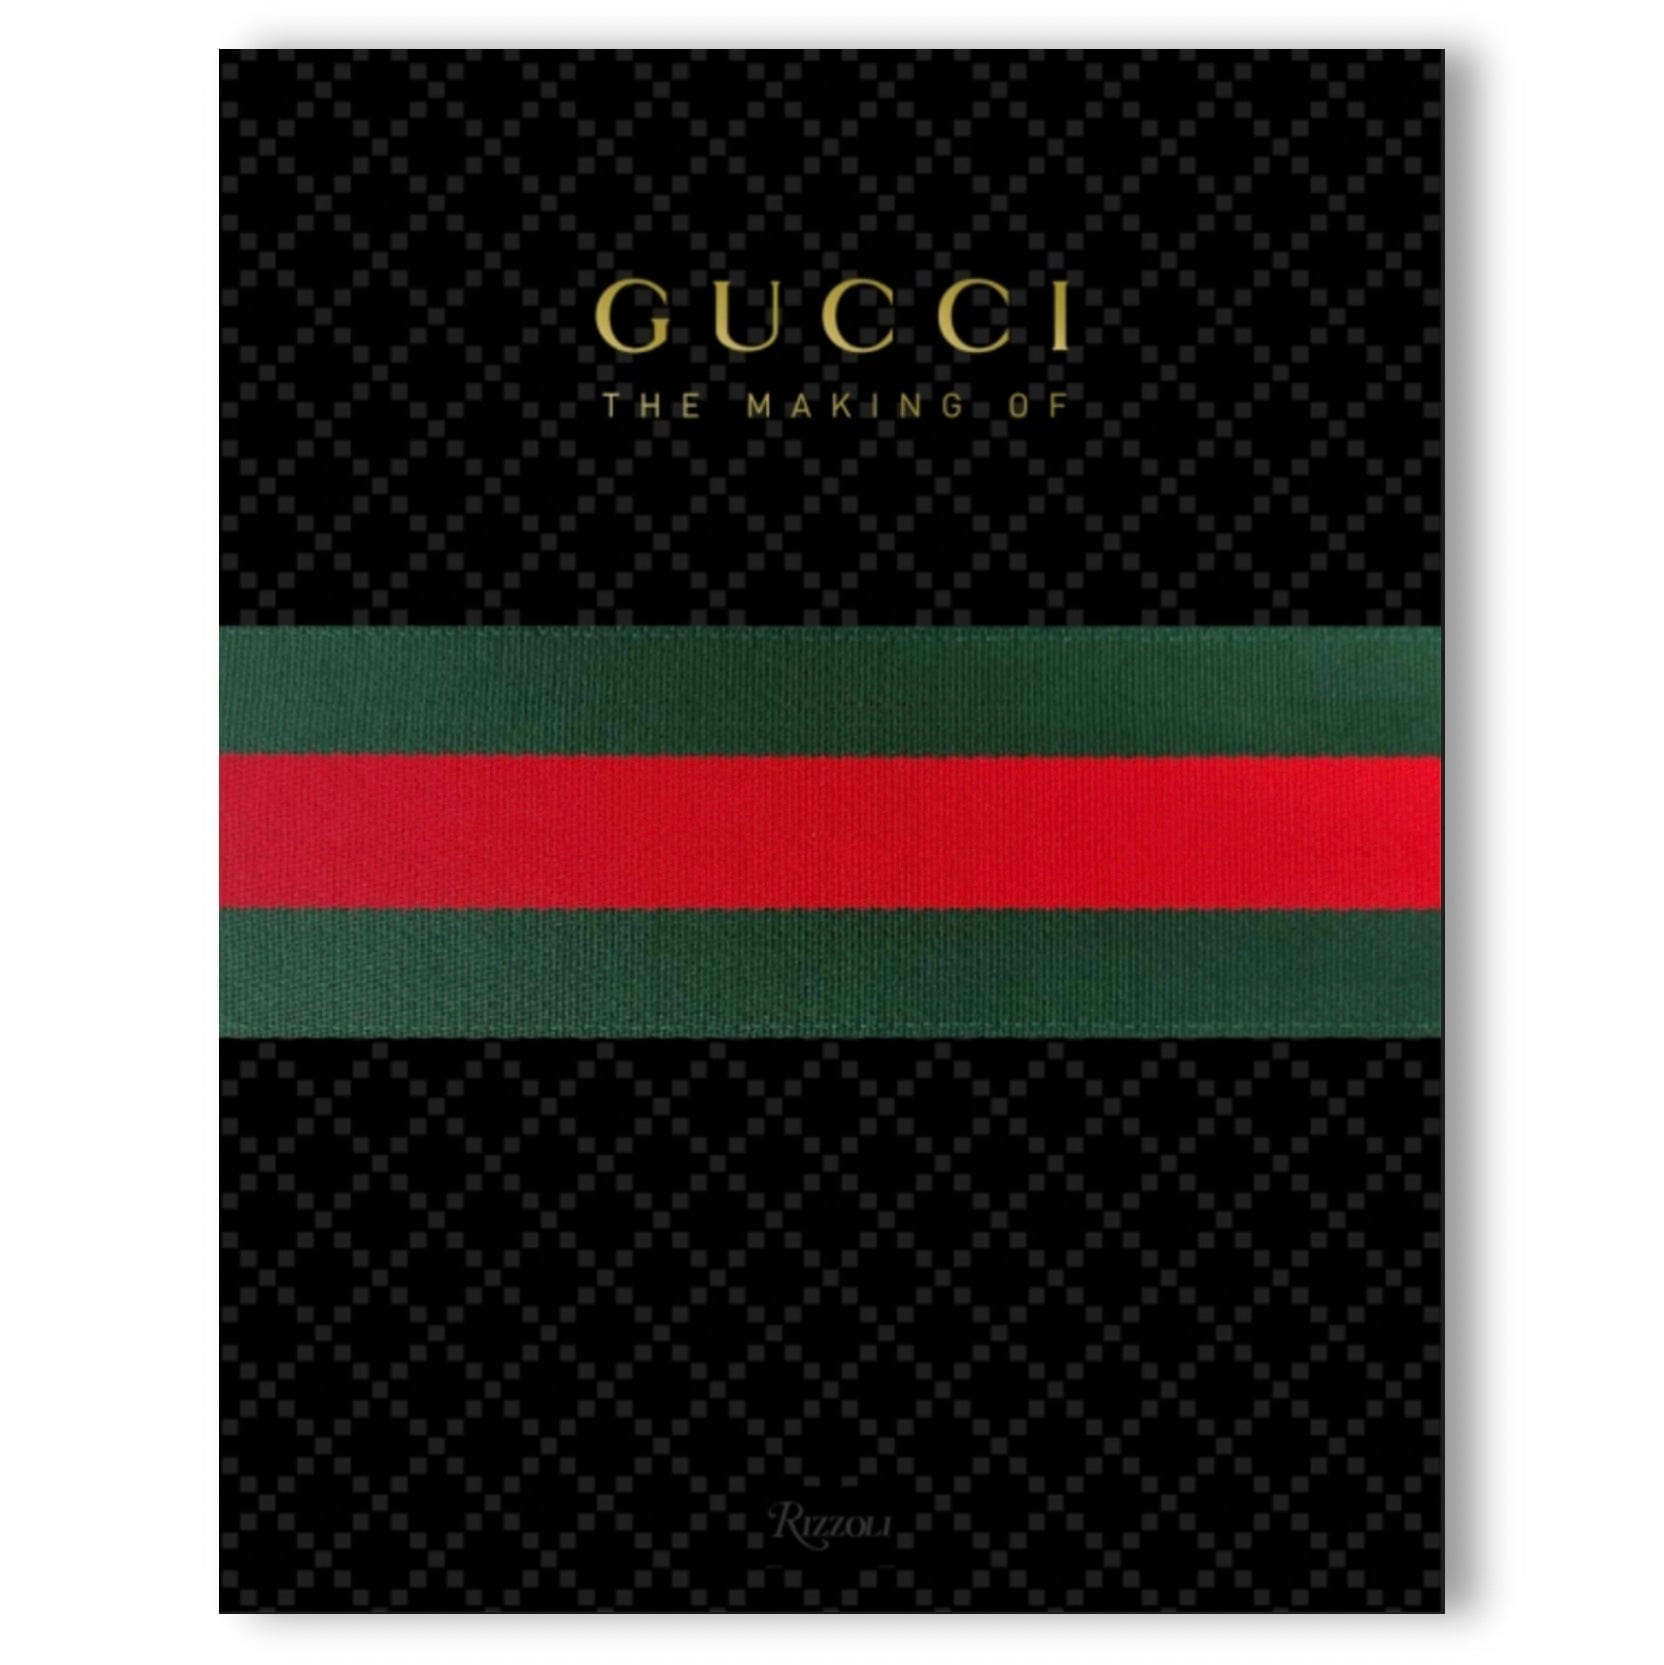 Hintsdeco Books Βιβλίο Τέχνης Βιβλίο Τέχνης, Fashion, Gucci : The Making Of, Μαύρο-Πράσινο-Κόκκινο, 26×4,1×33cm, Hintsdeco